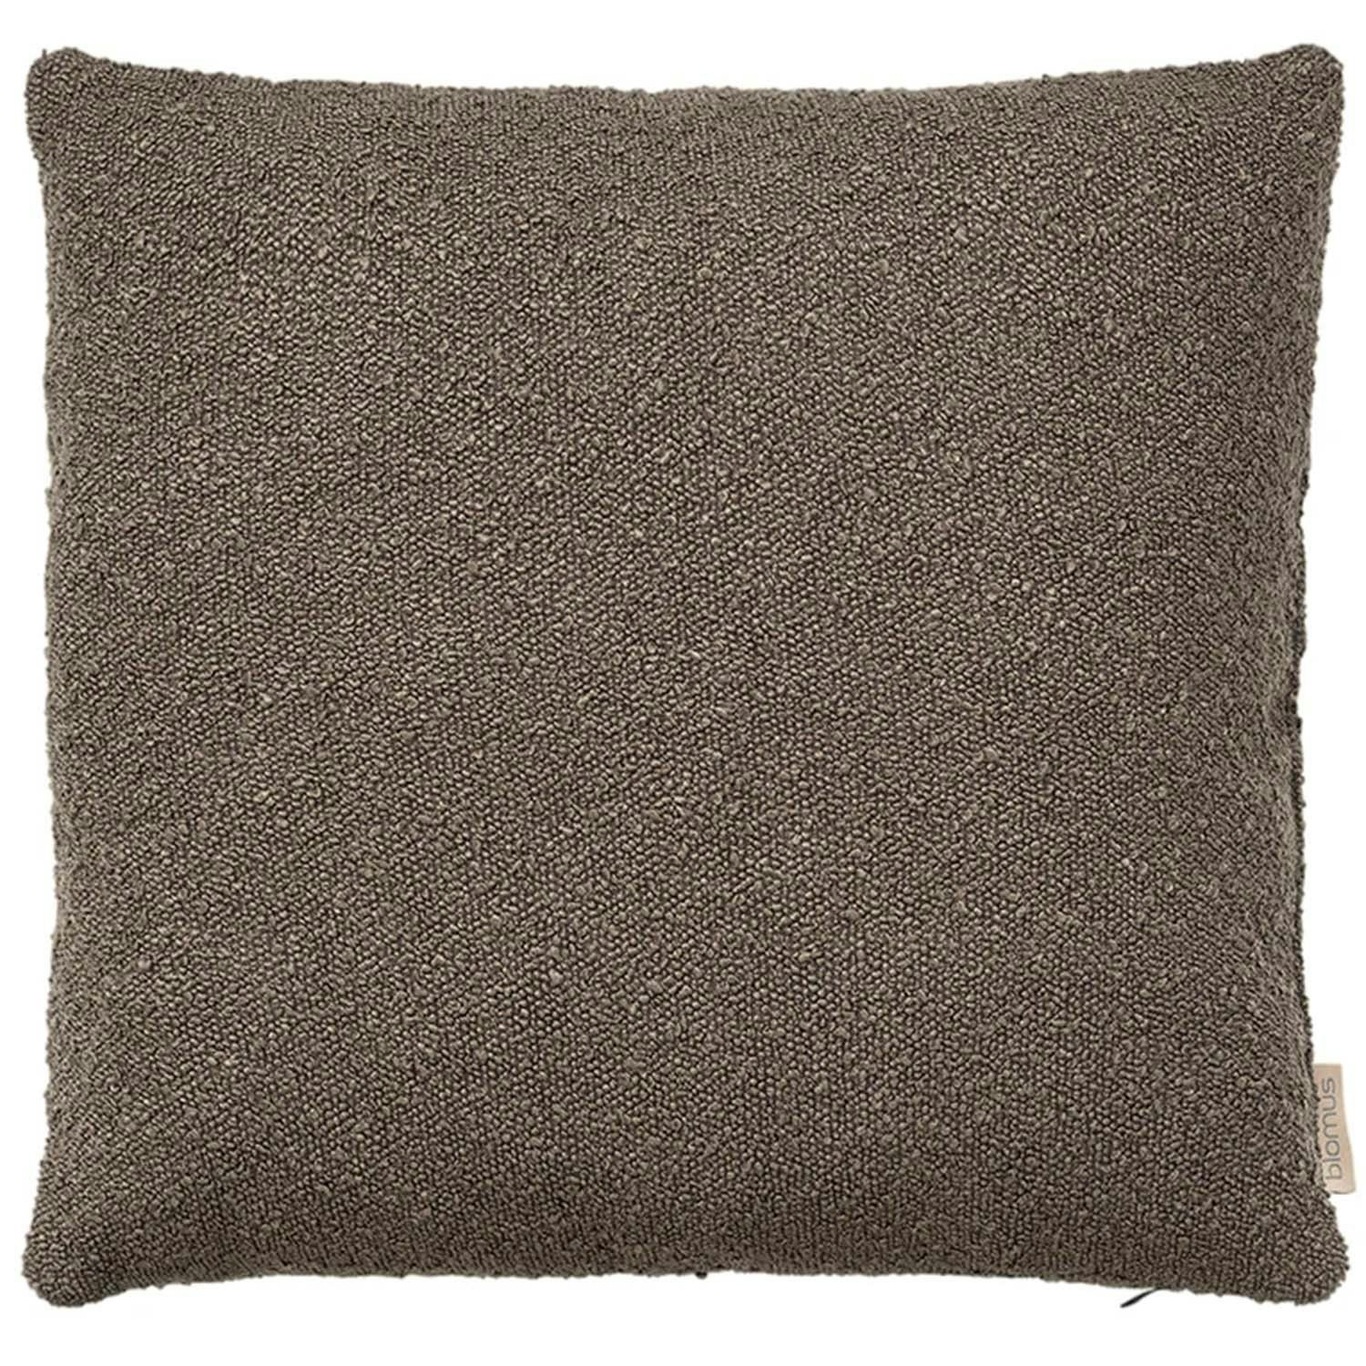 BOUCLE Cushion Cover 40X40 cm, Espresso